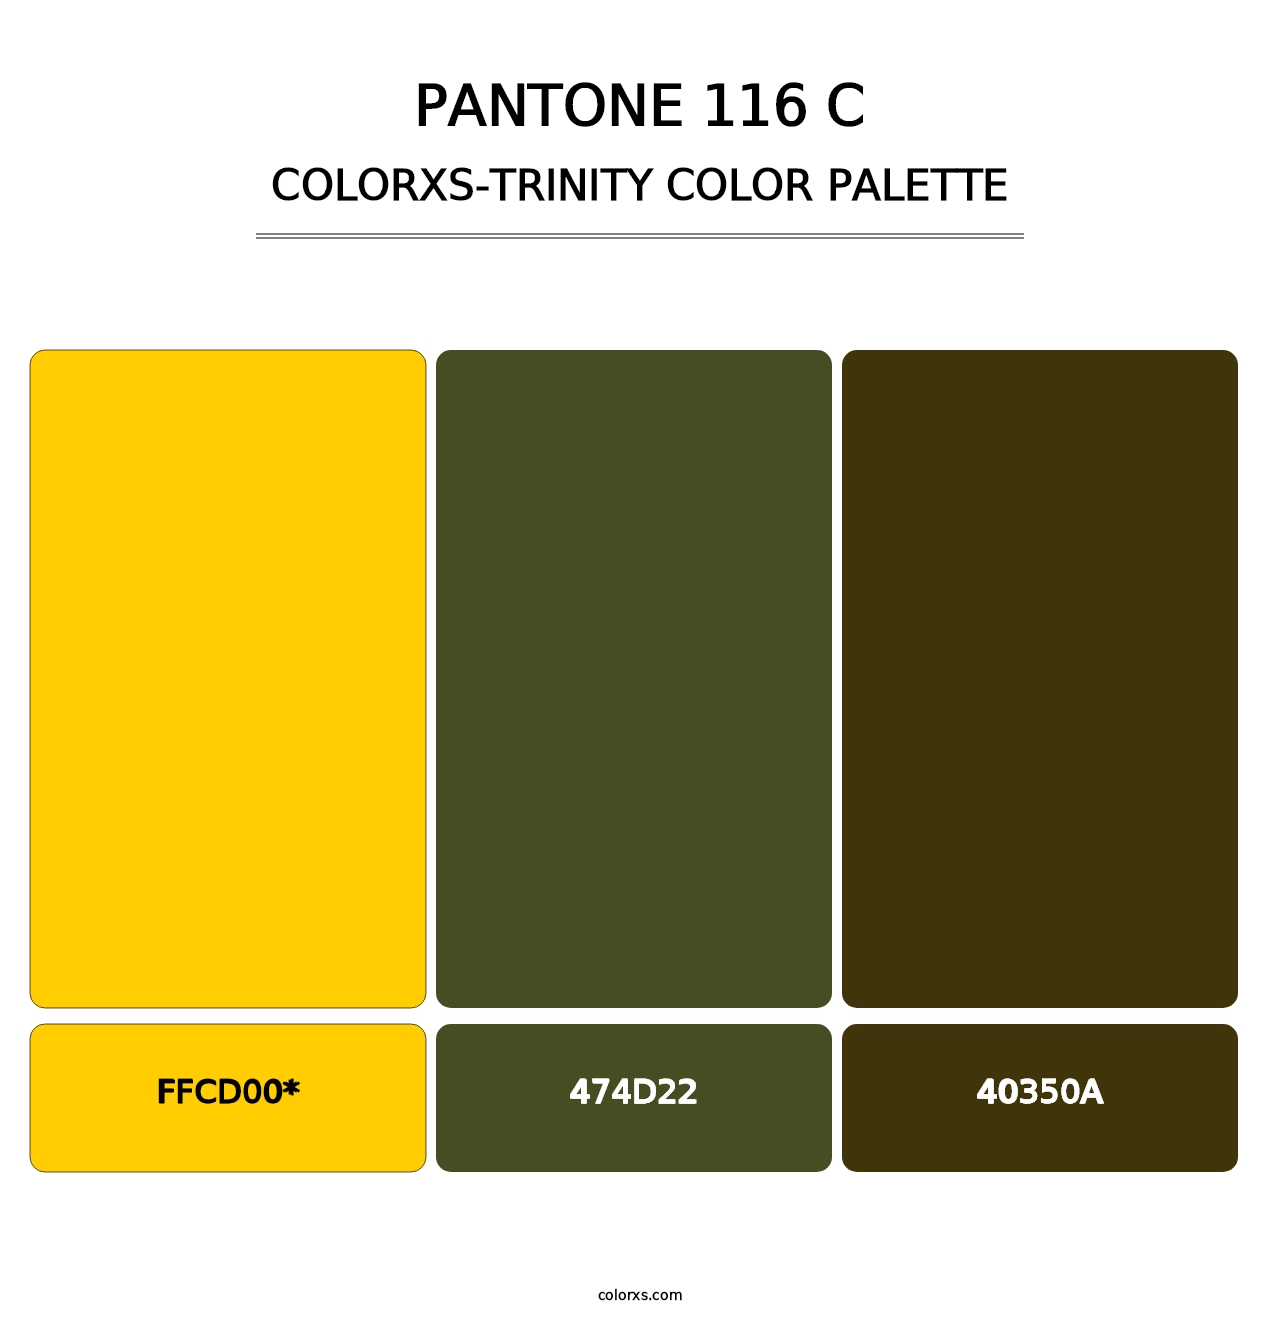 PANTONE 116 C - Colorxs Trinity Palette